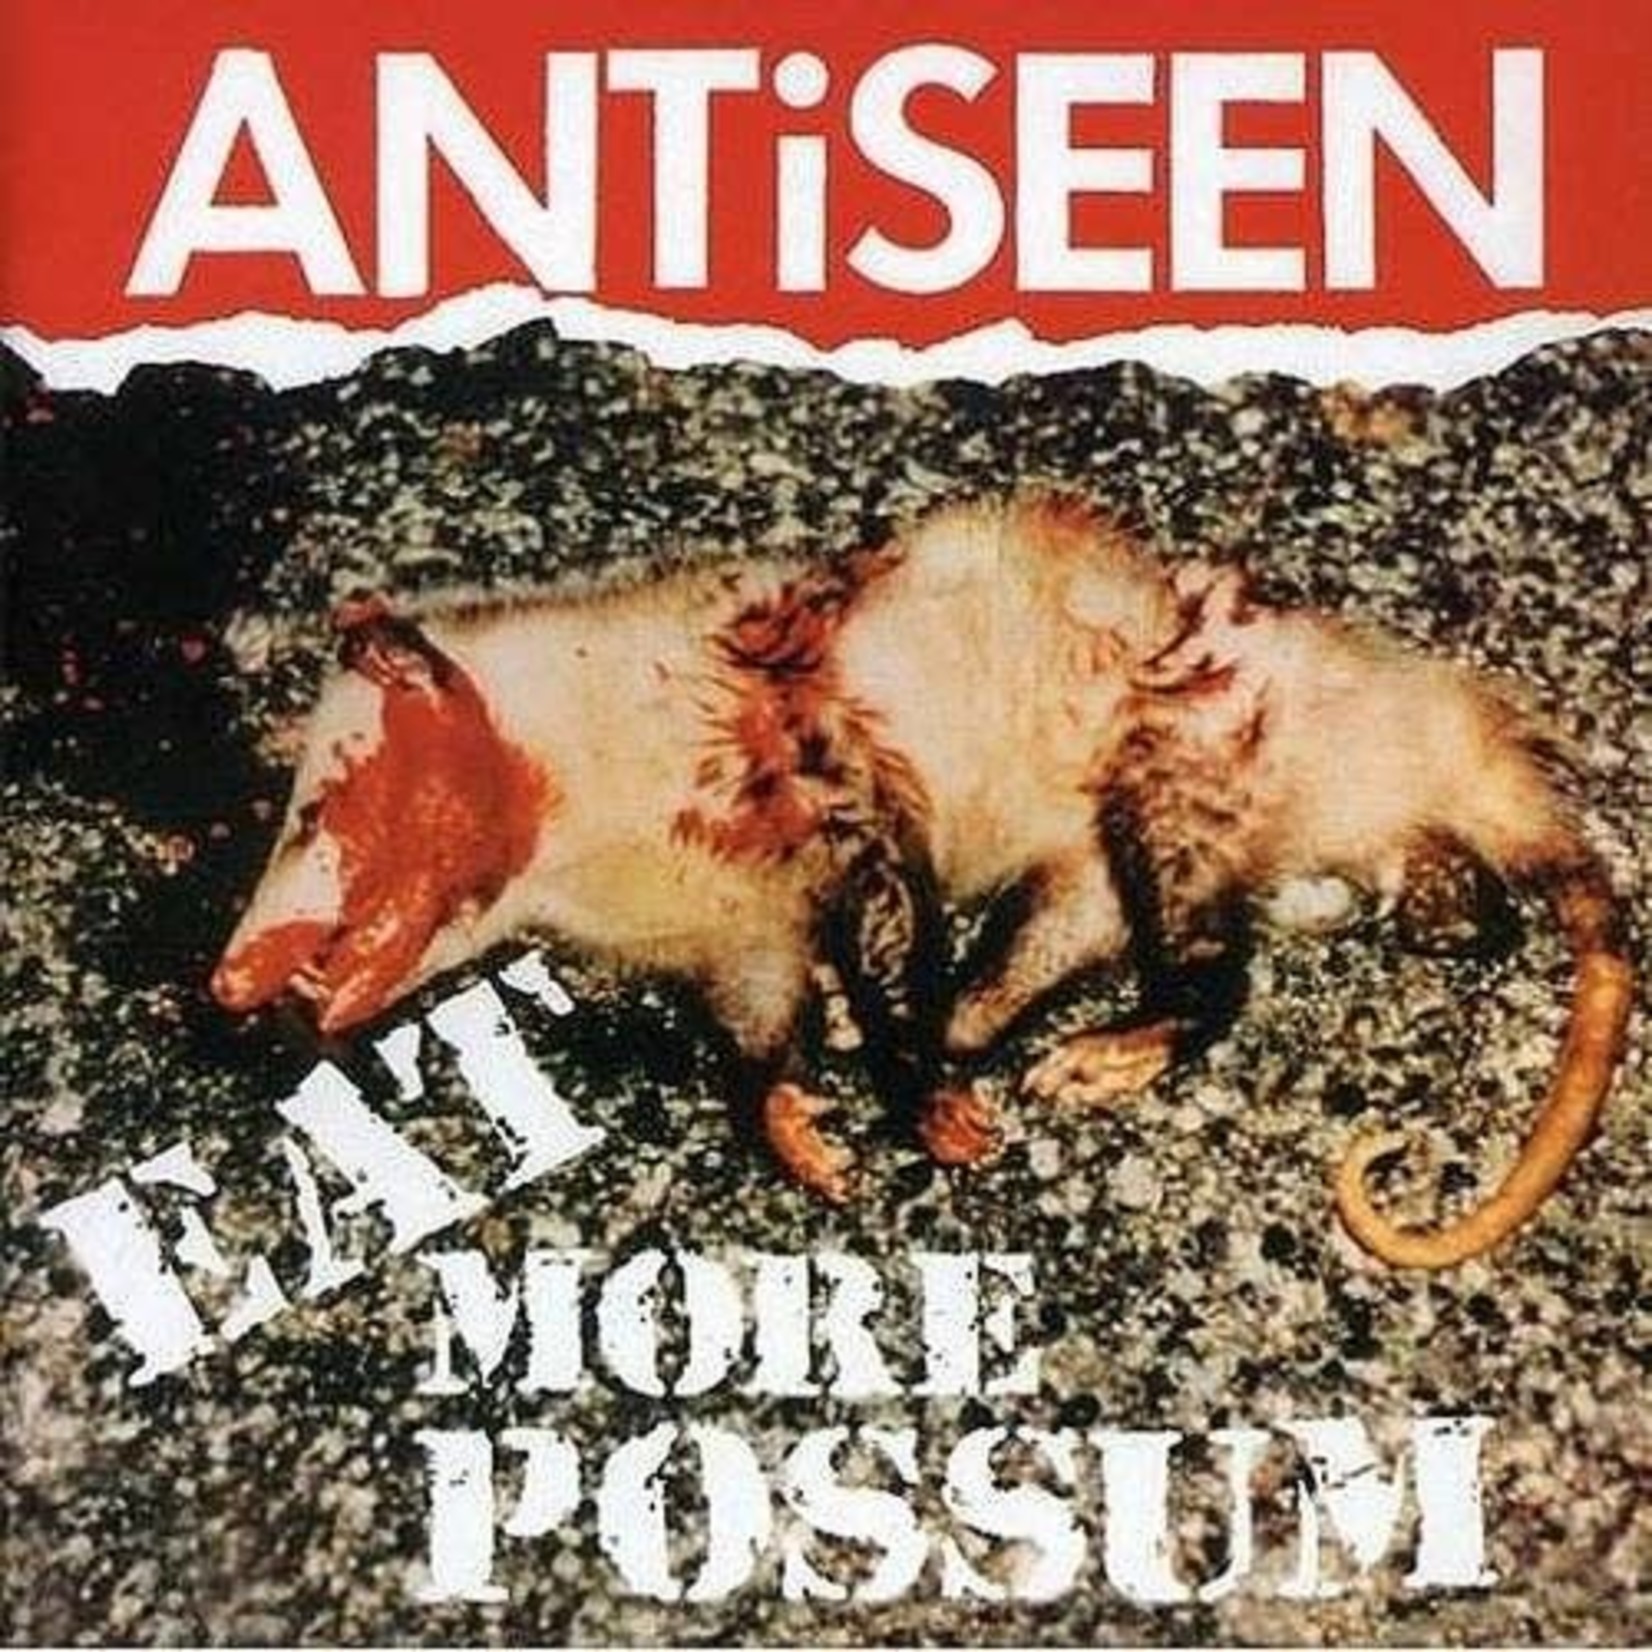 [New] Antiseen - Eat More Possum